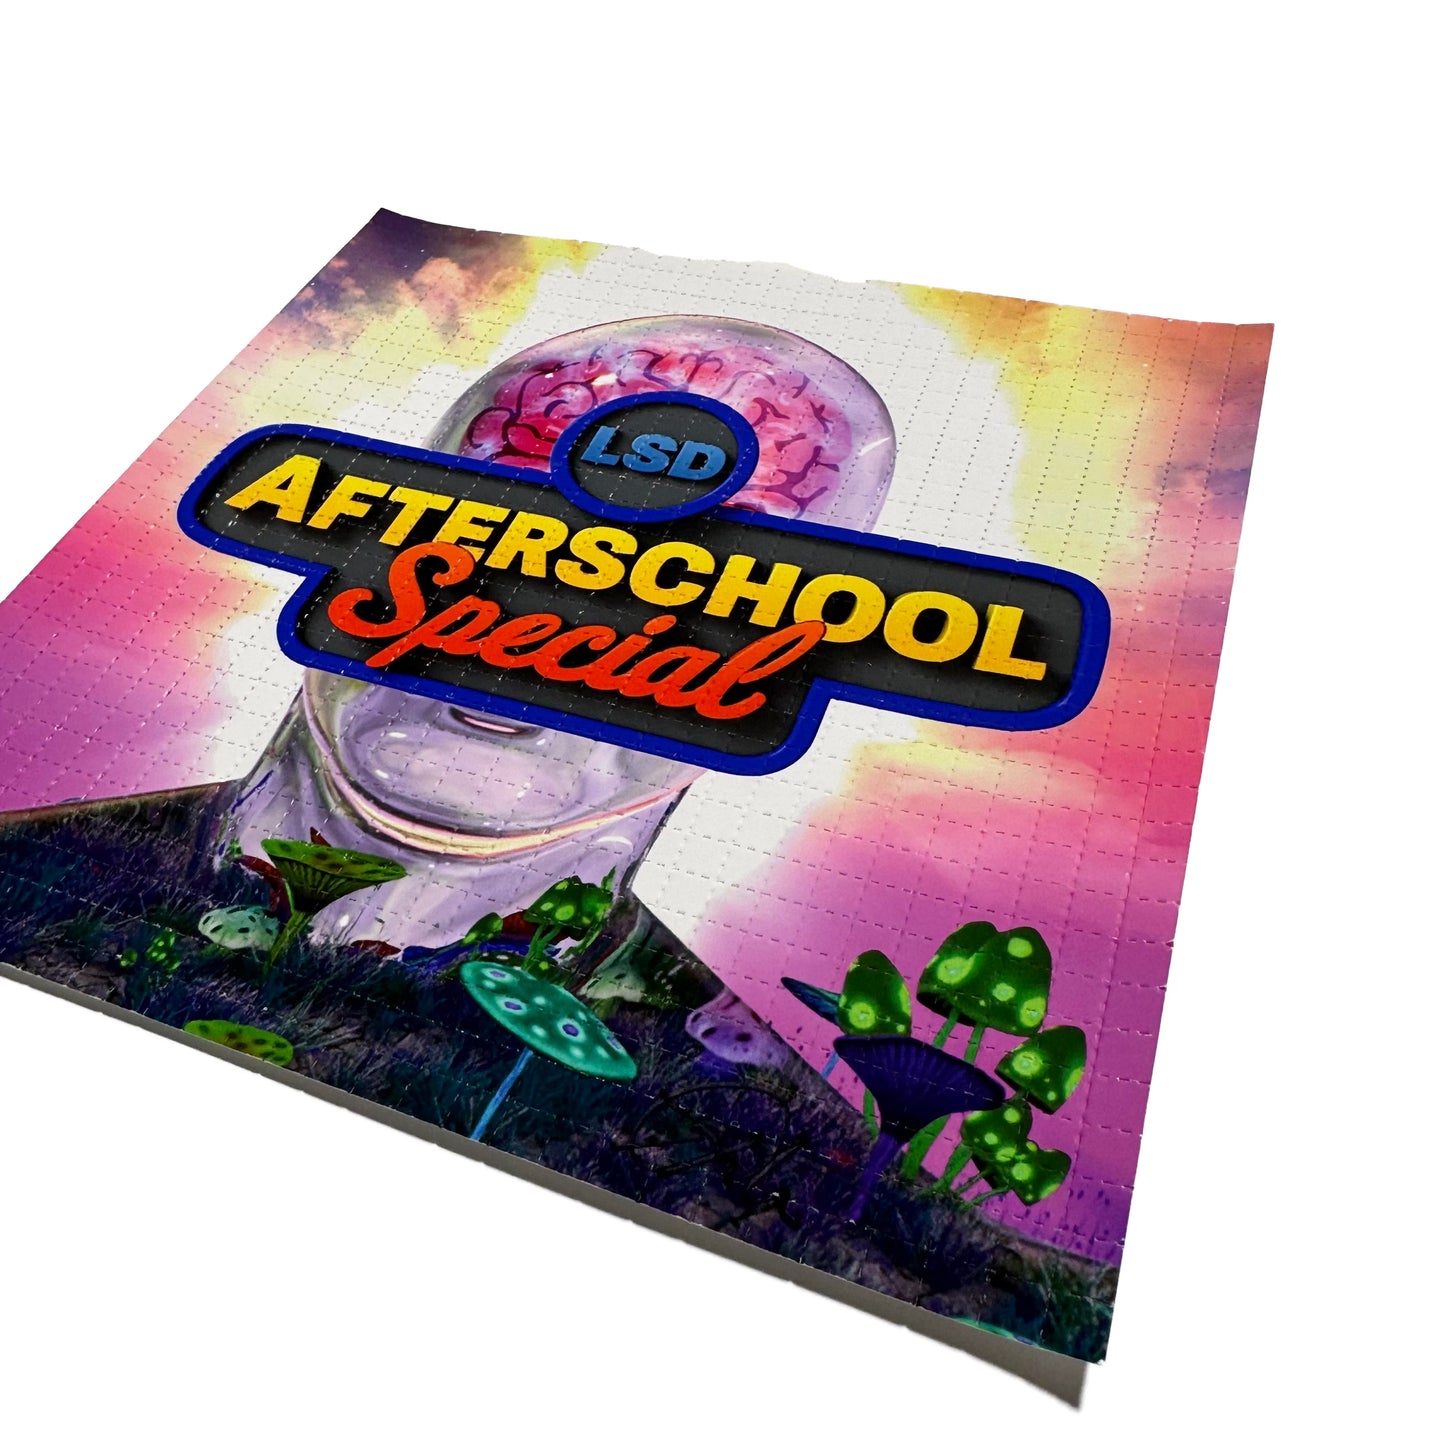 LSD Afterschool Special Blotter (Edition of 50)